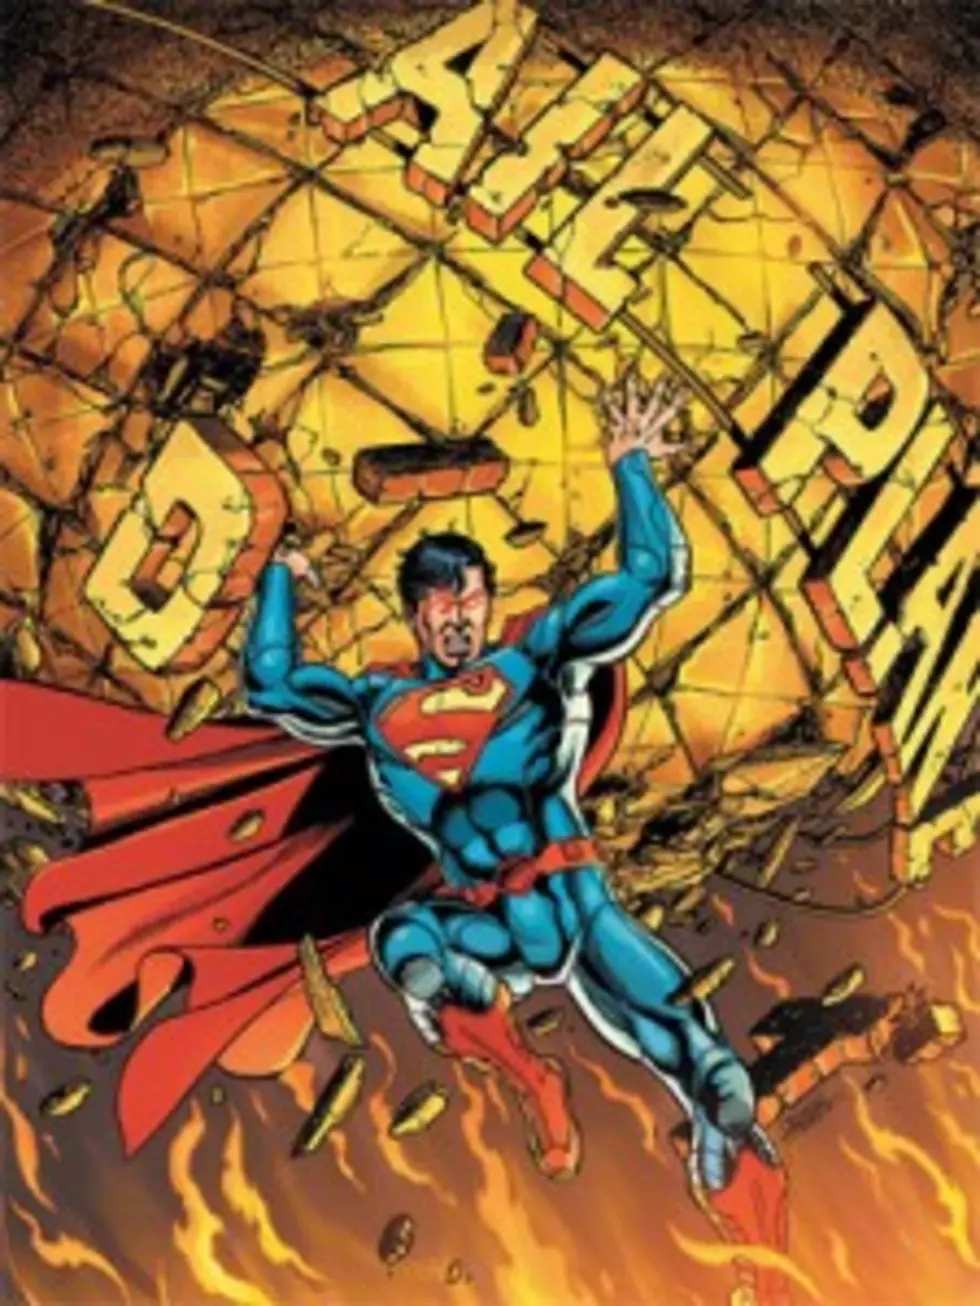 Lois Lane Dumps Superman in New Comic